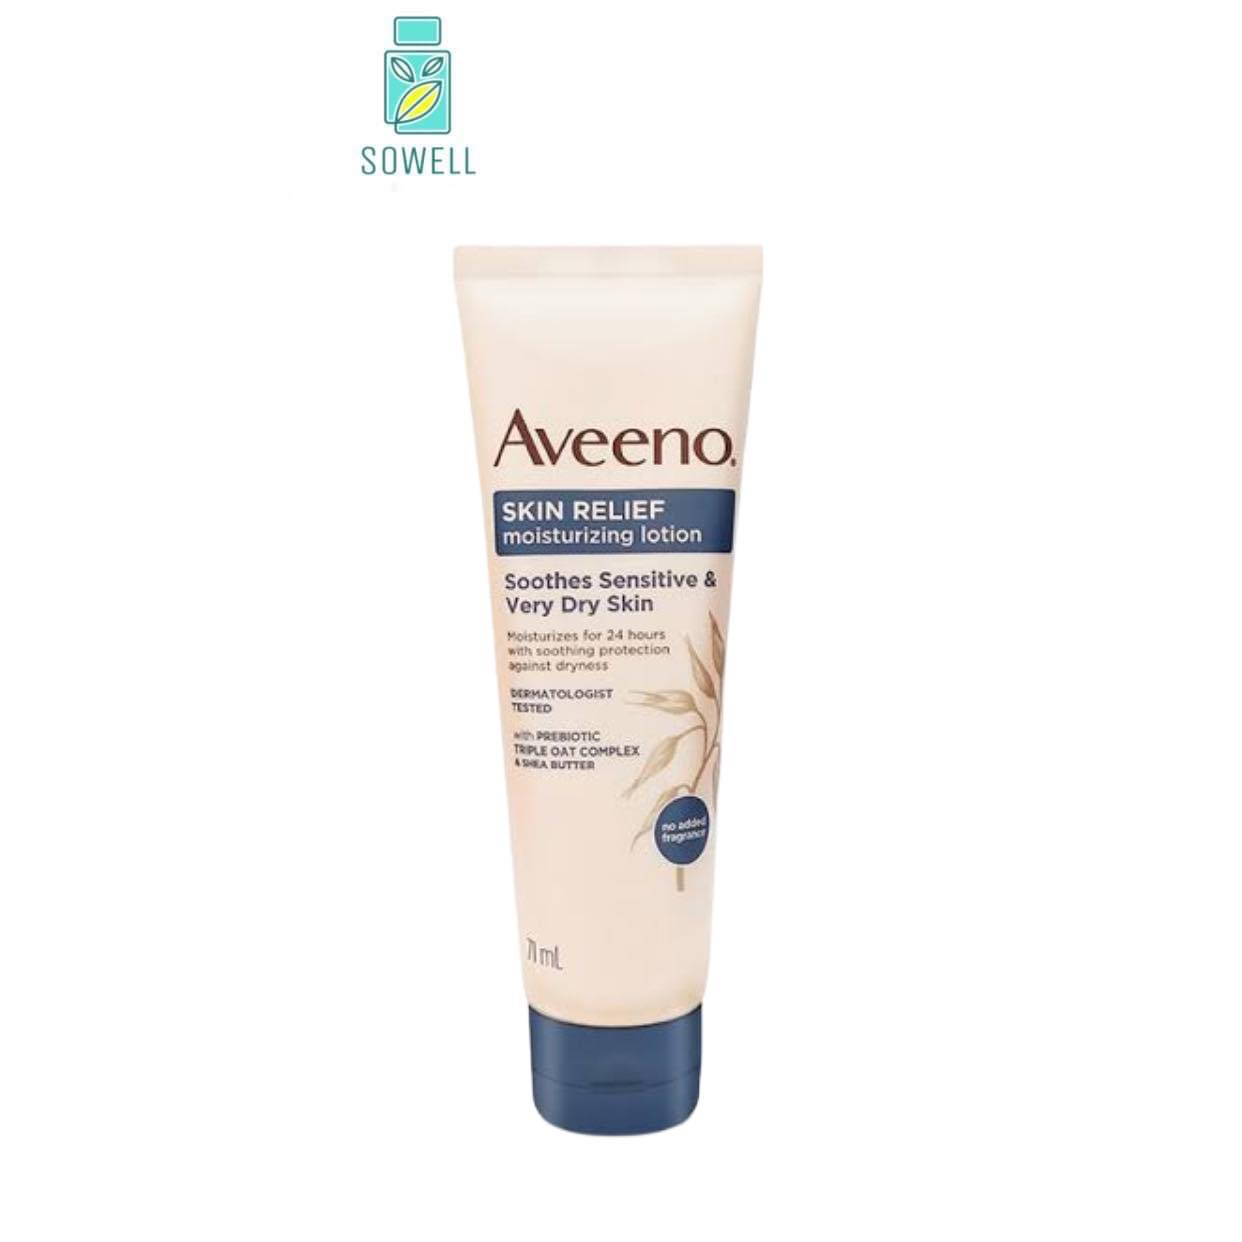 Aveeno skin relief moisturizing lotion 71ml